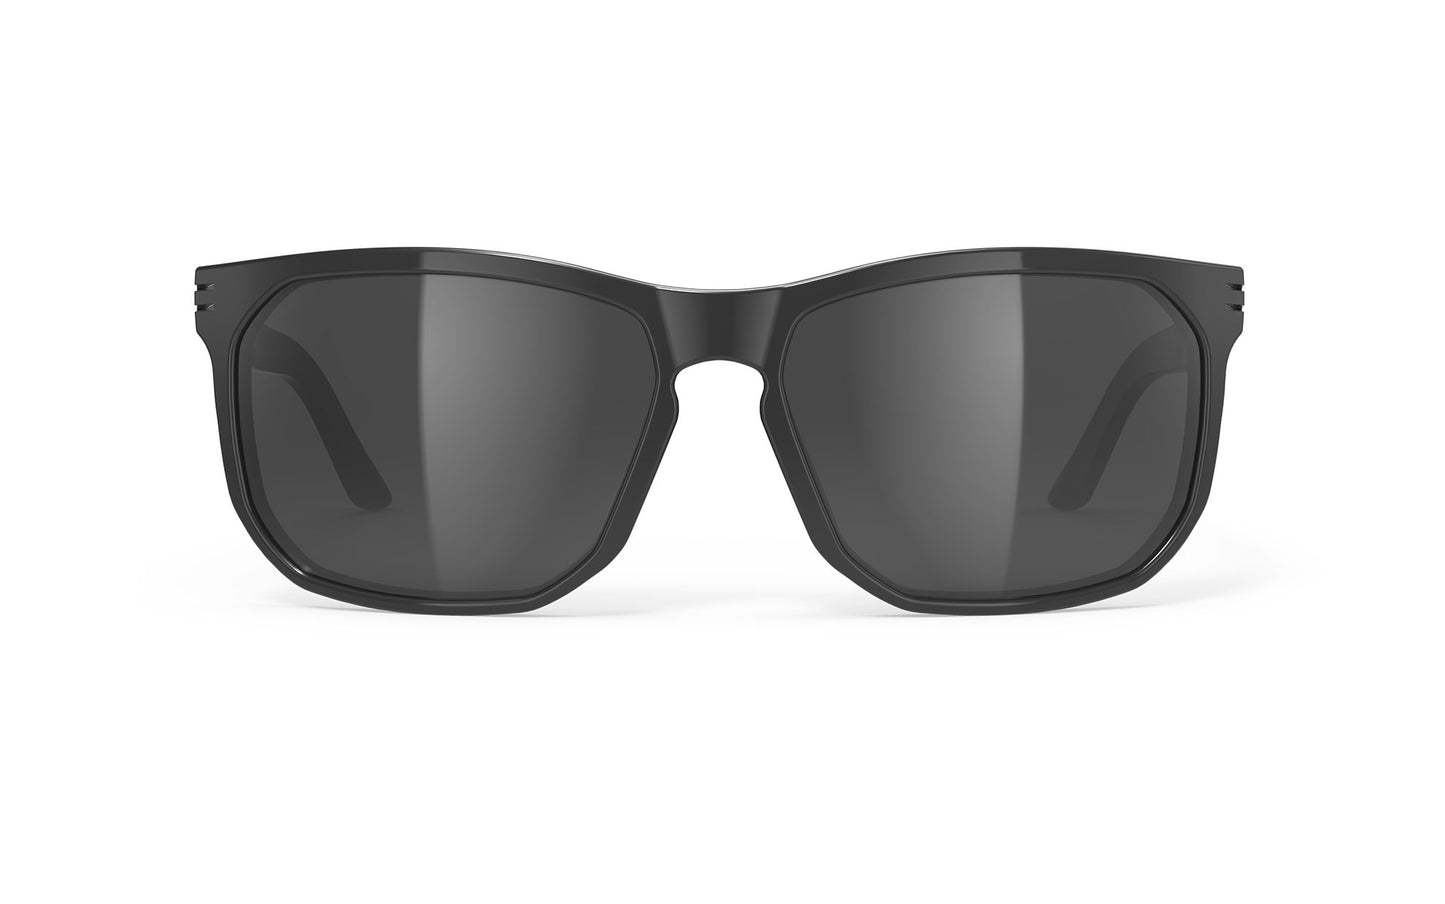 Rudy Project Soundrise Black Gloss - Rp Optics Smoke Black Sunglasses